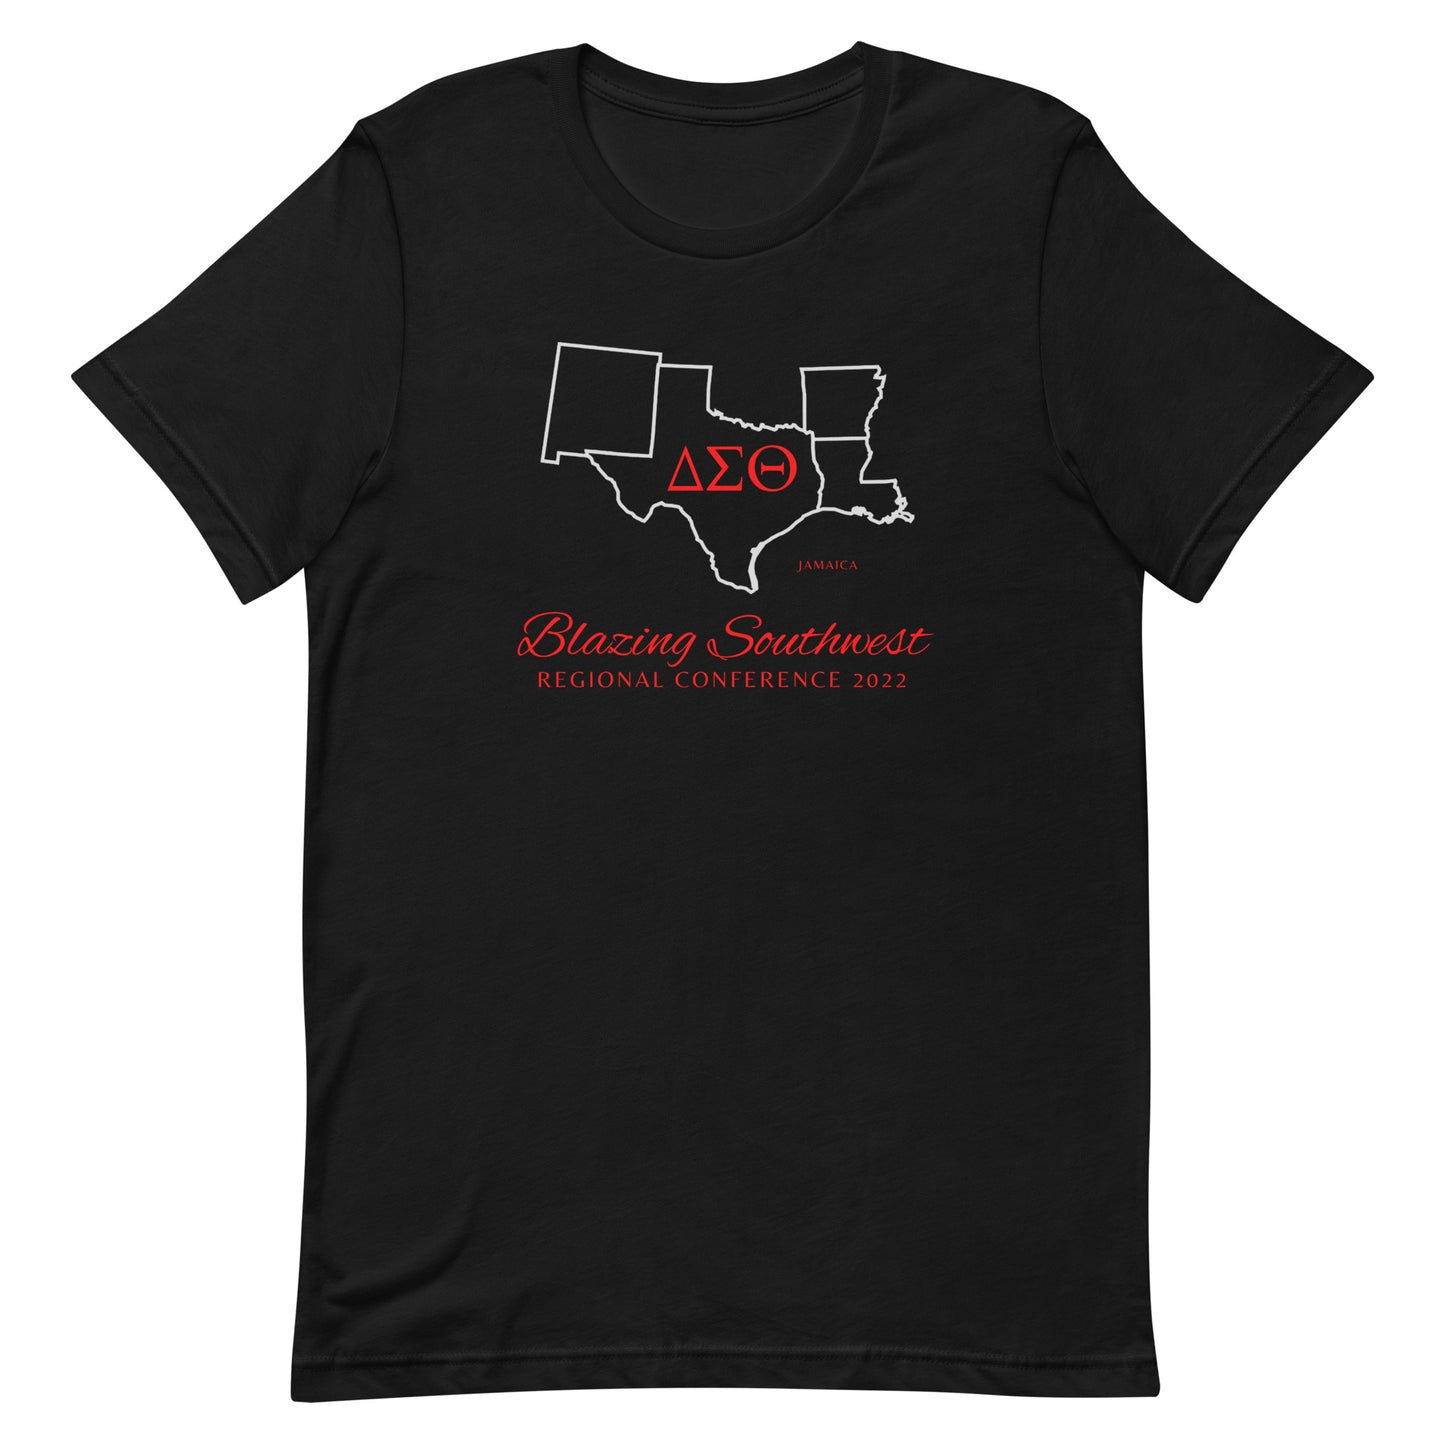 Southwest 2022 Regional Conference T-Shirt